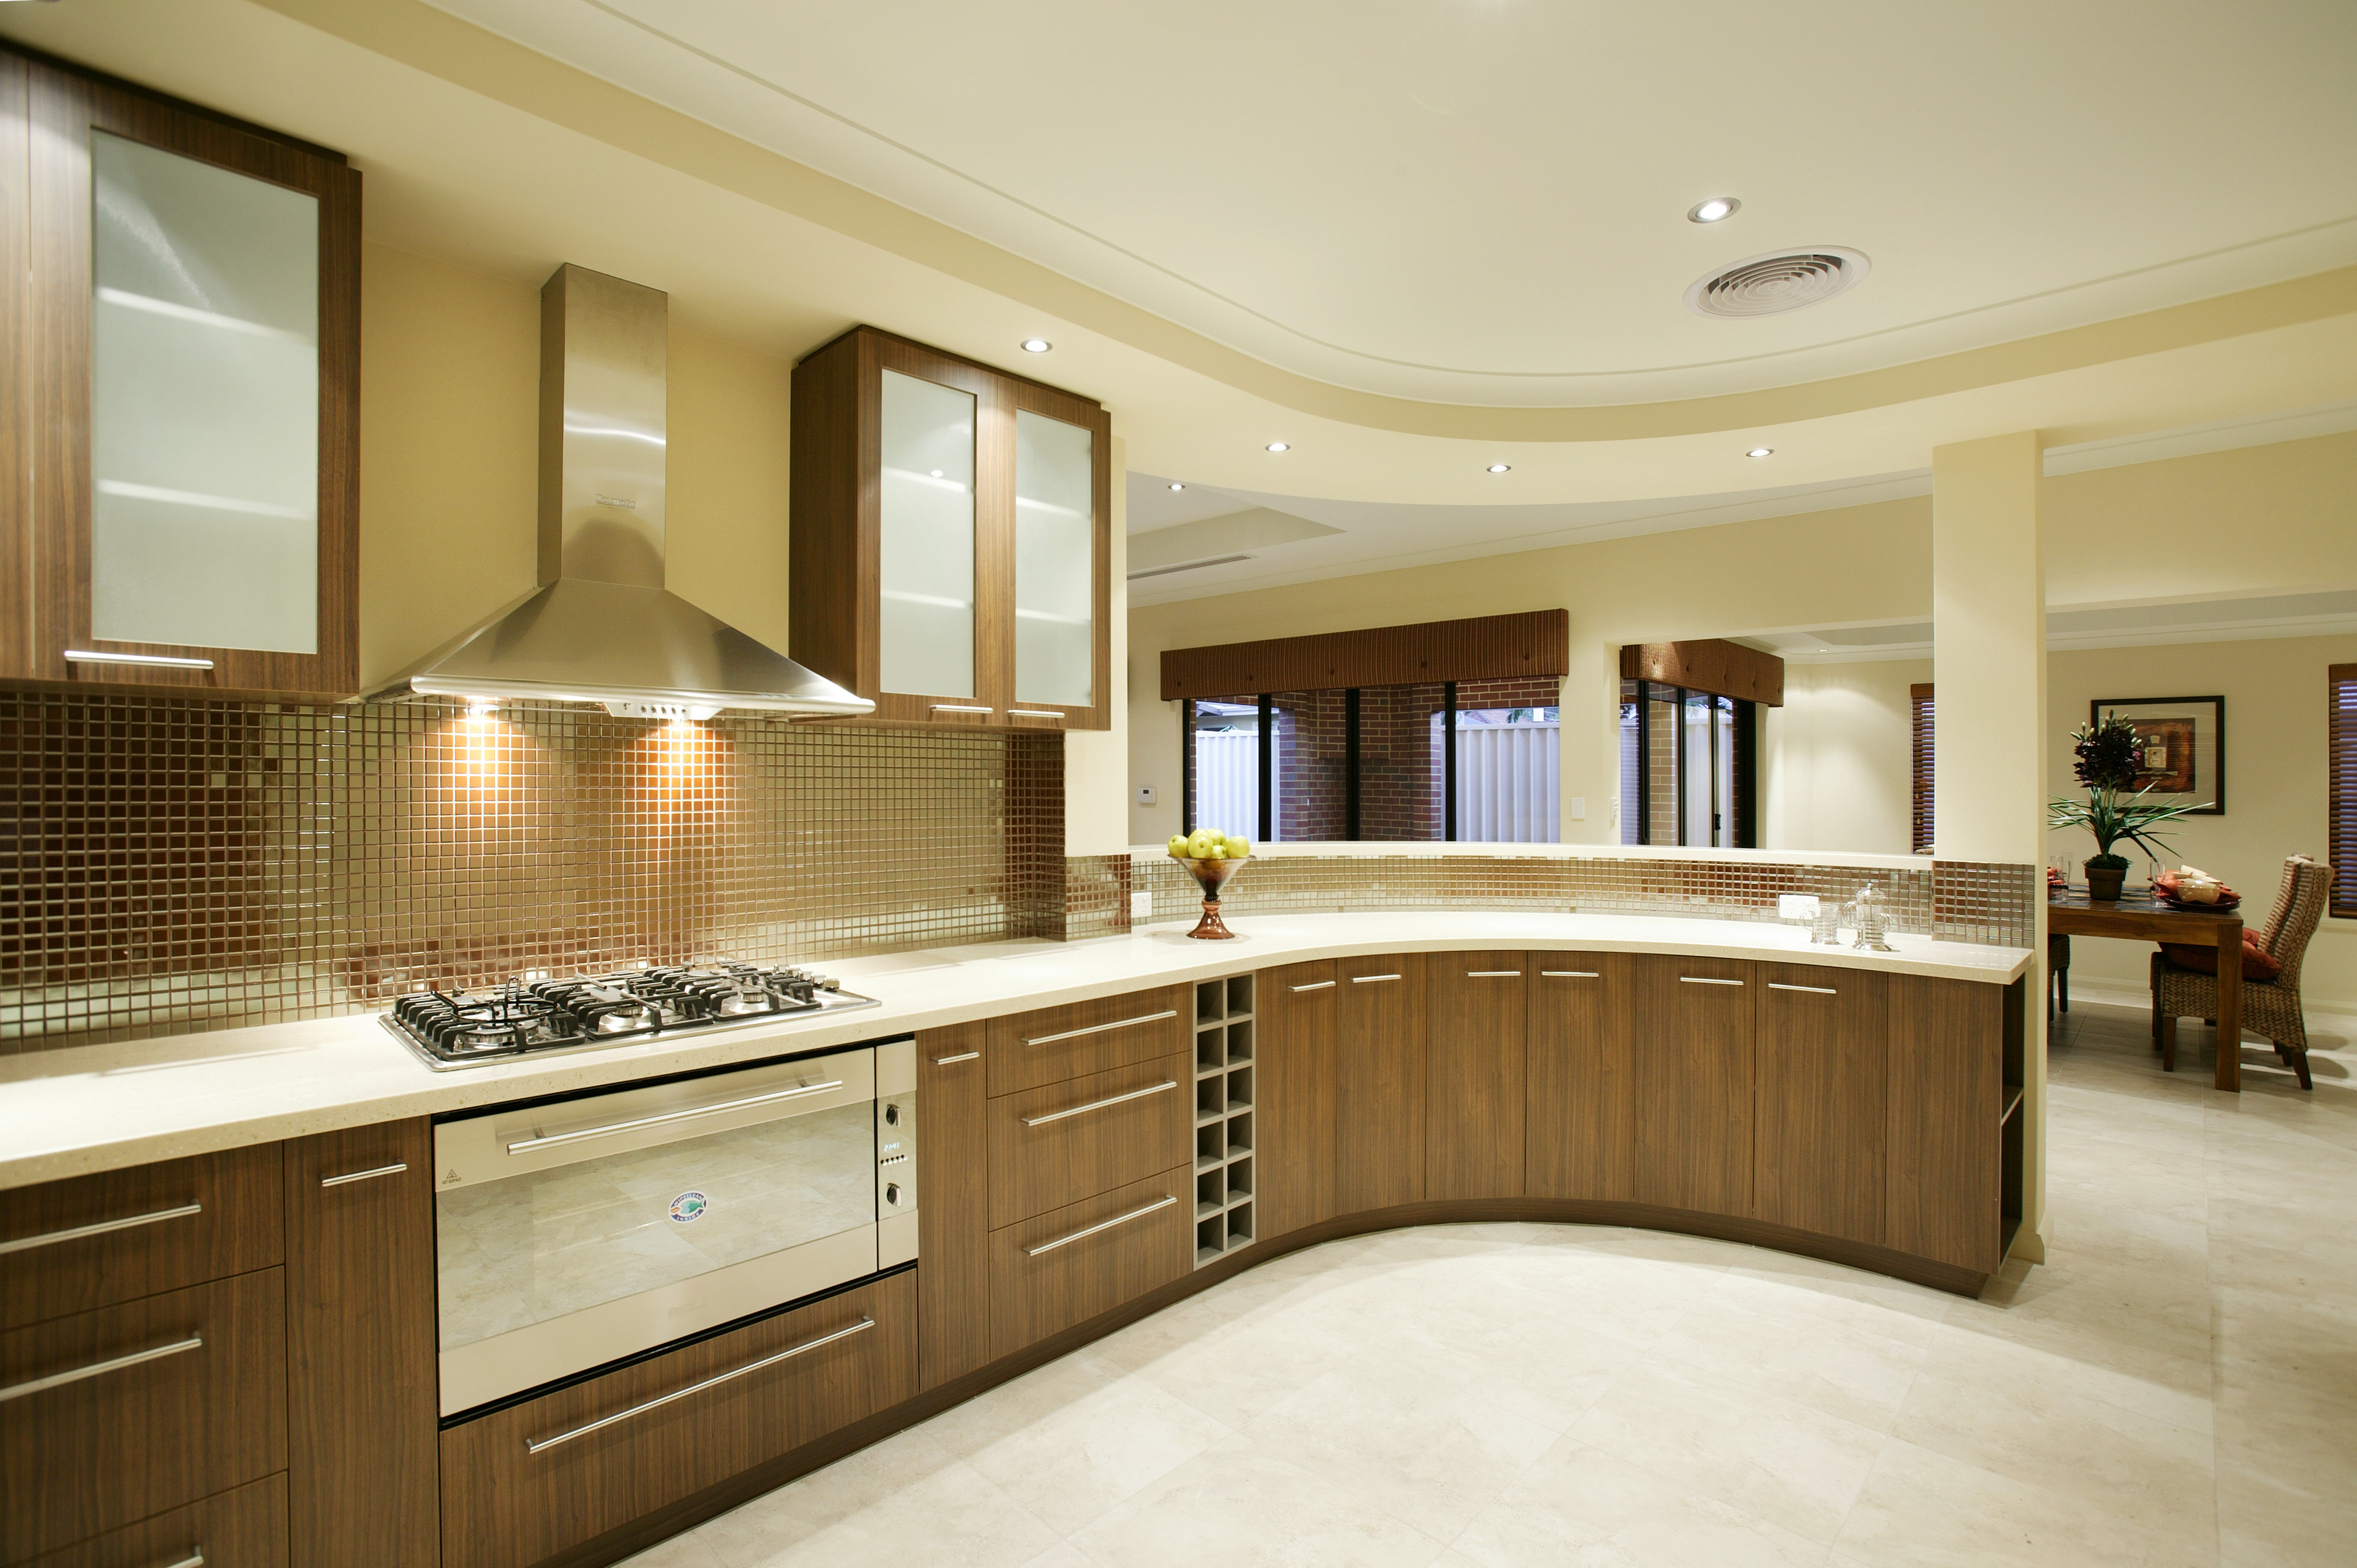  house kitchen interior design pictures